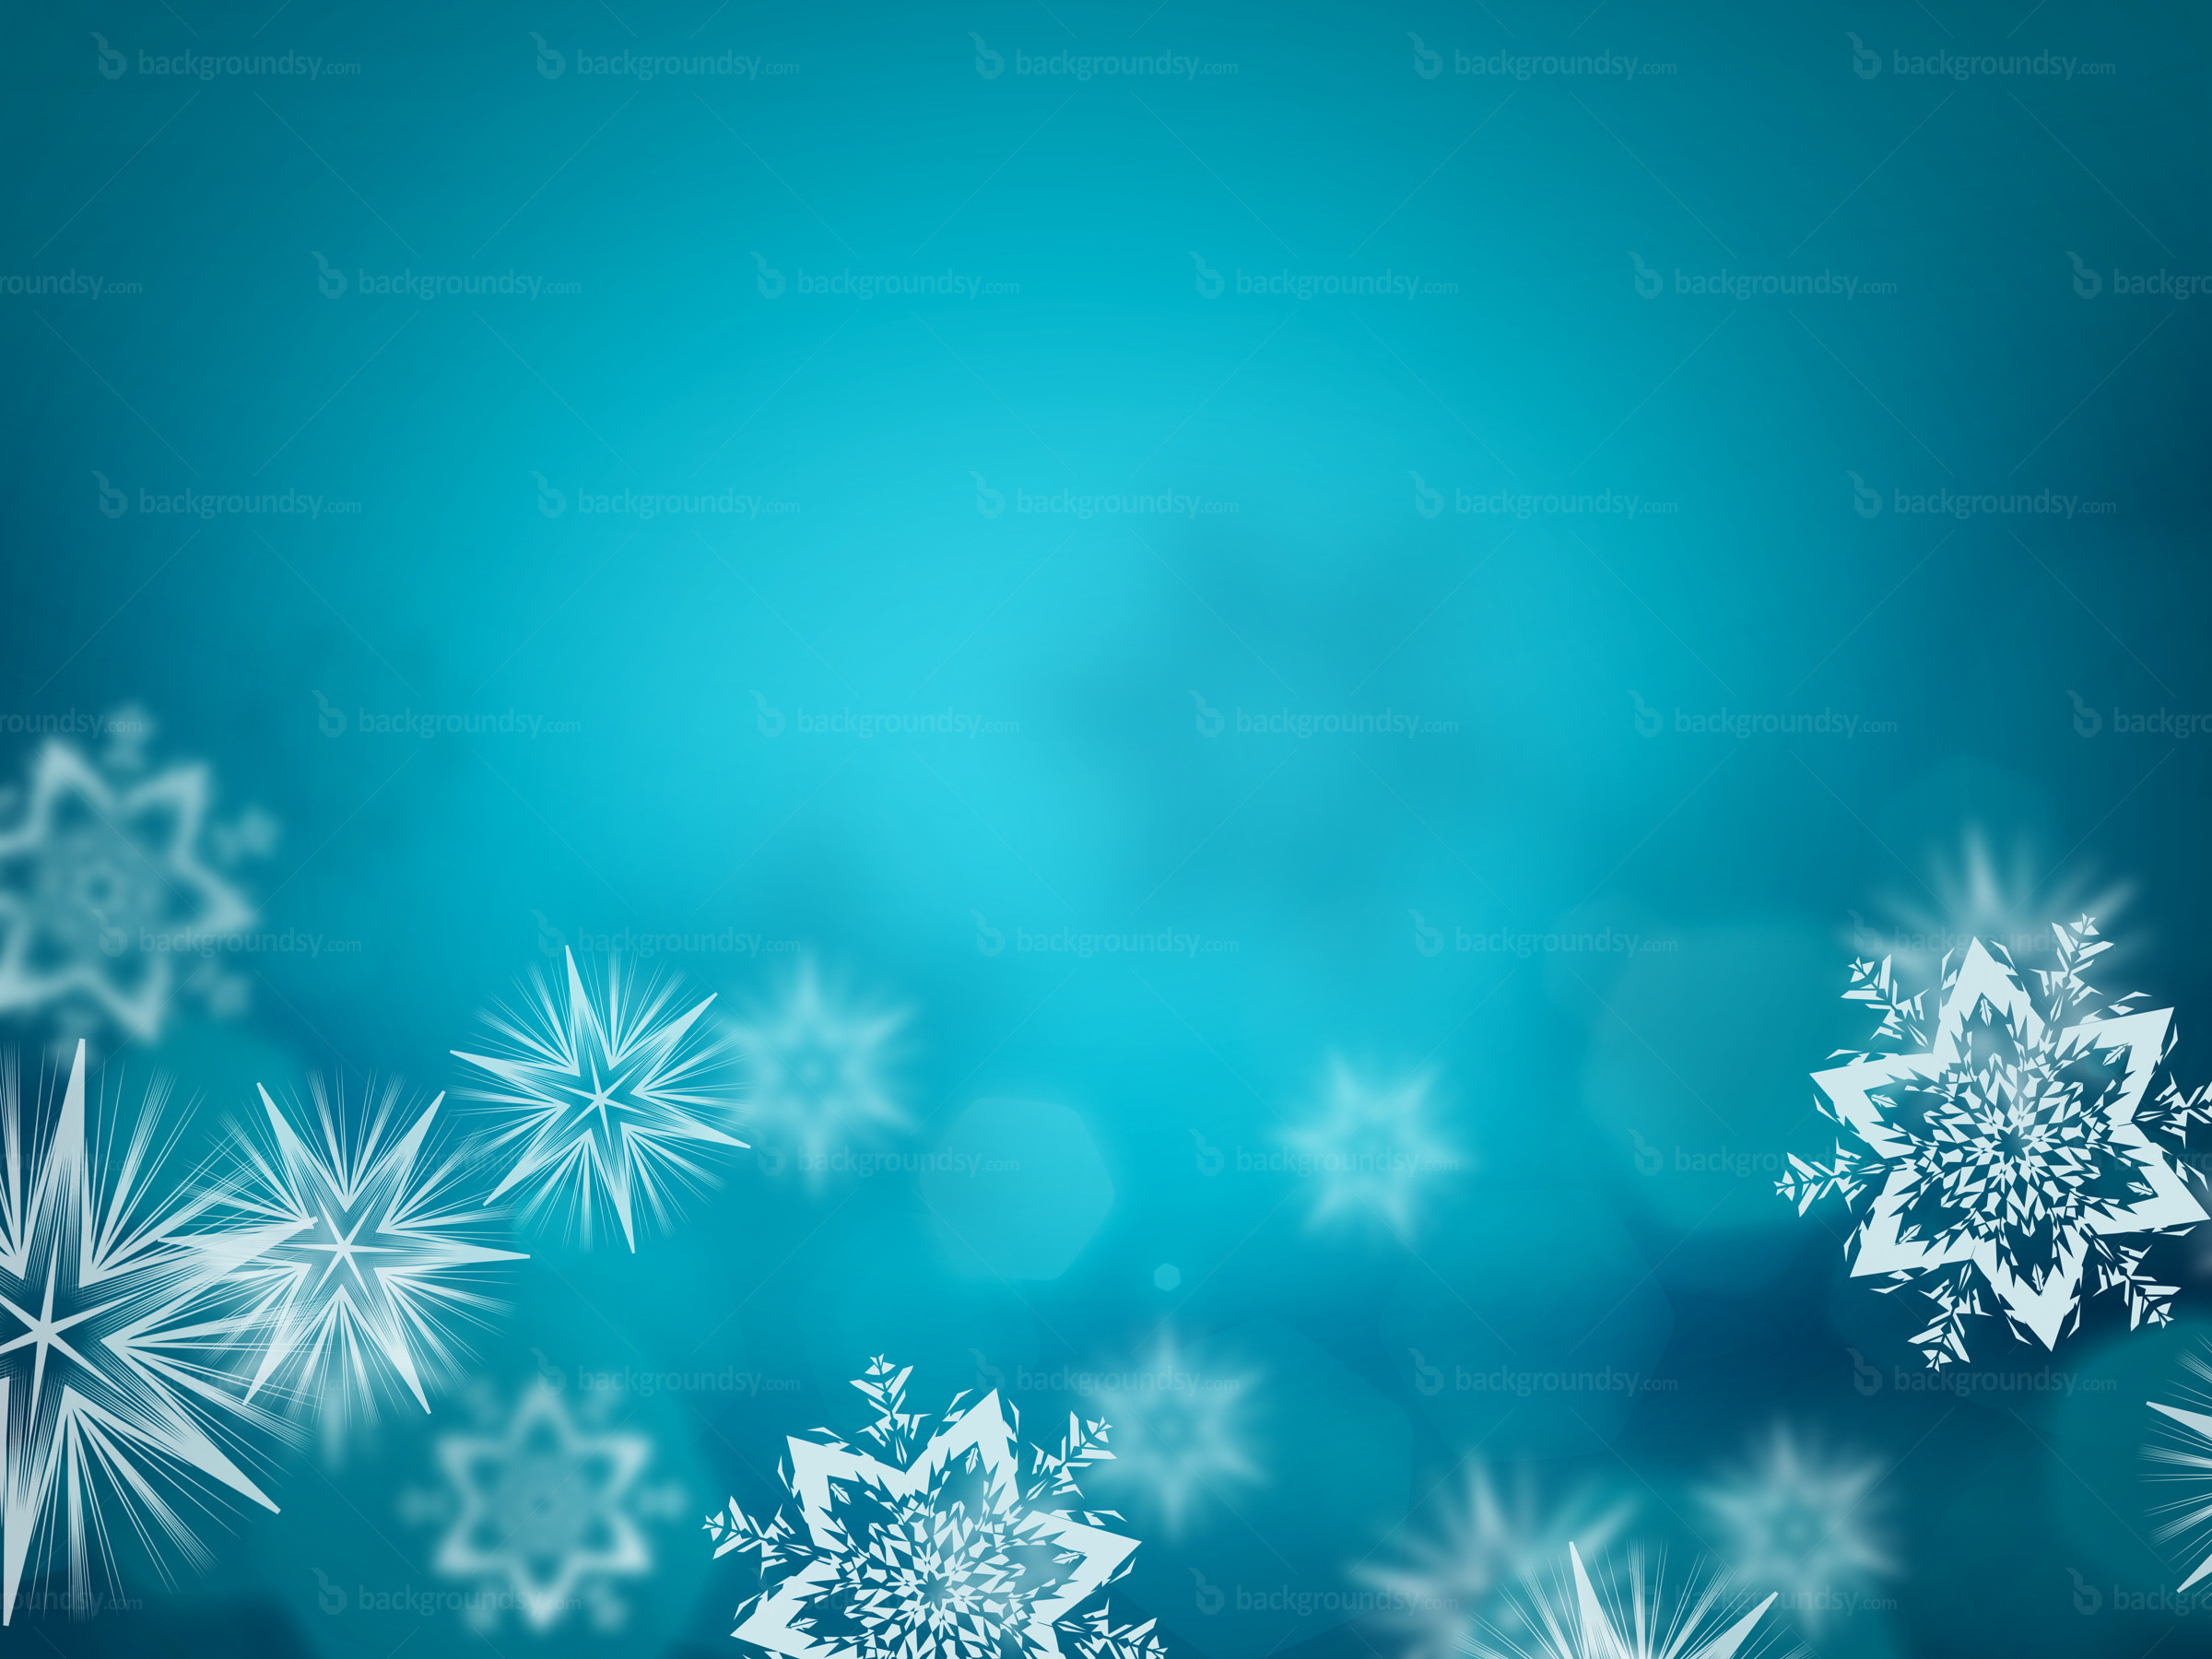 2400x1800 File Name Winter Christmas Desktop Backgrounds | Home Design Ideas